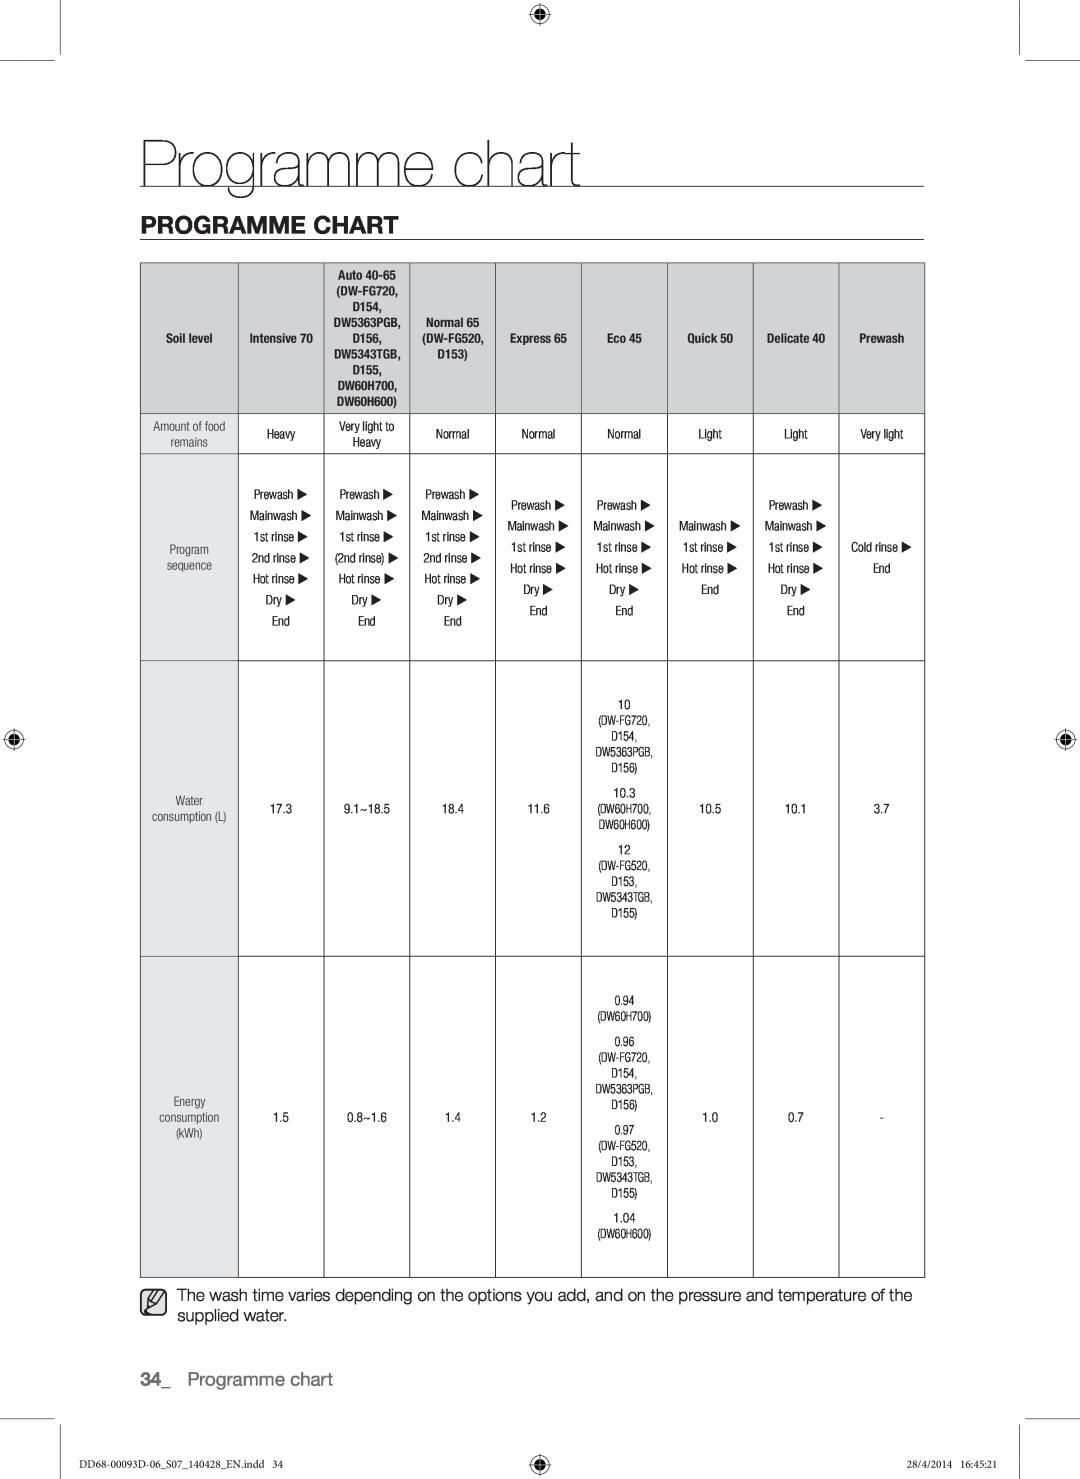 Samsung DW60H700FEW/TR, DW-FG520W/XTR, DW-FG520S/XTR, DW60H700FEA/TR manual Programme chart, Programme Chart 